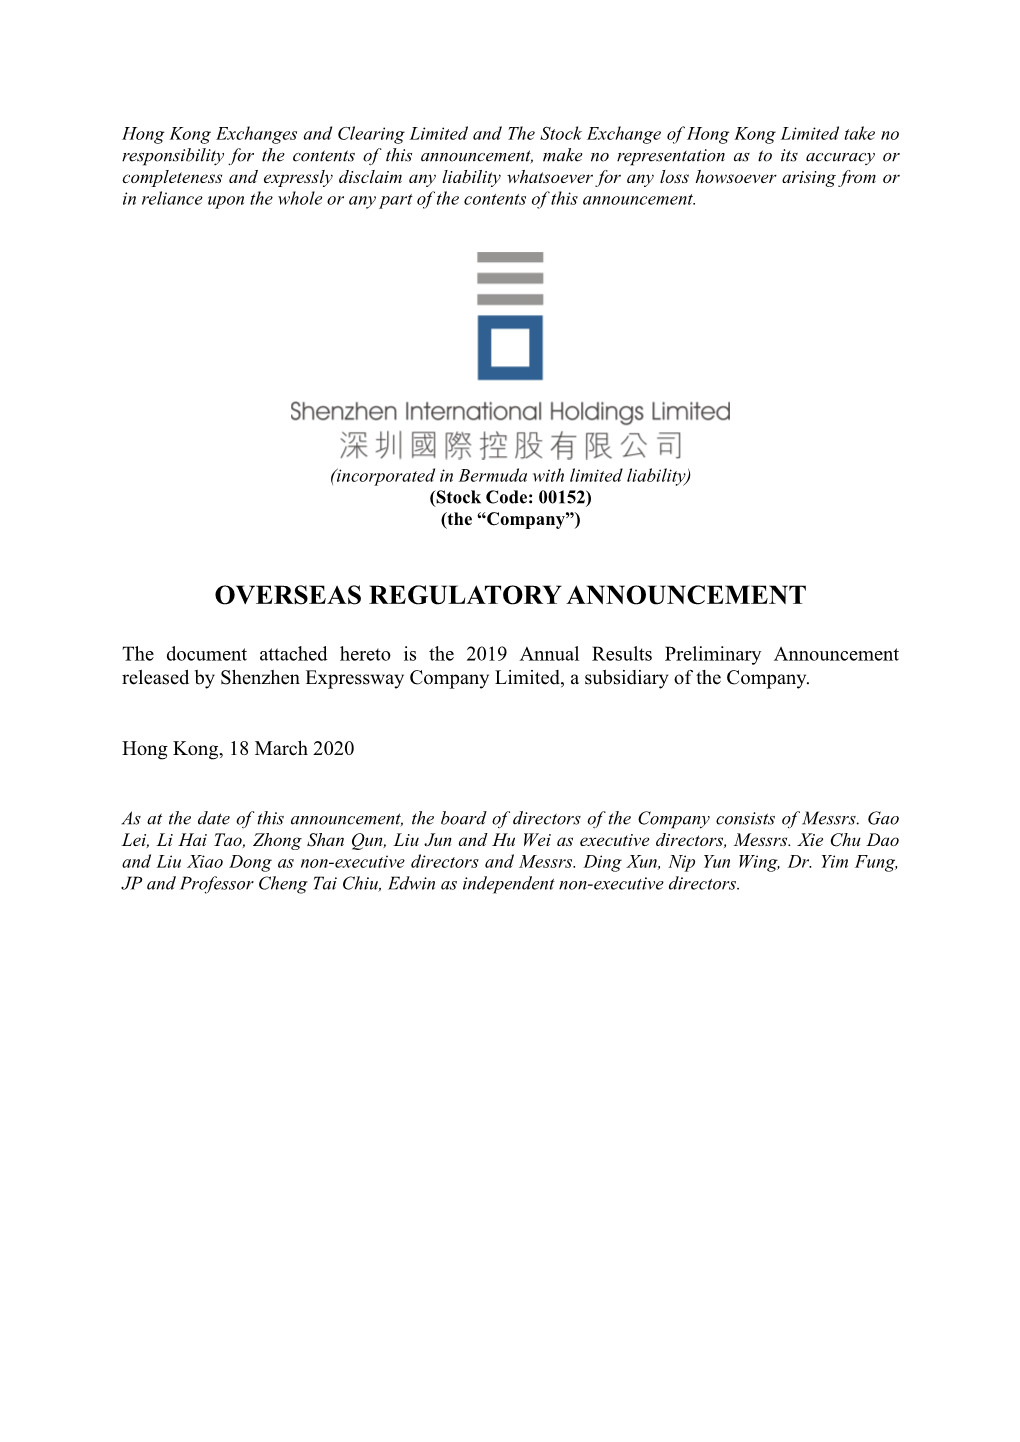 Overseas Regulatory Announcement